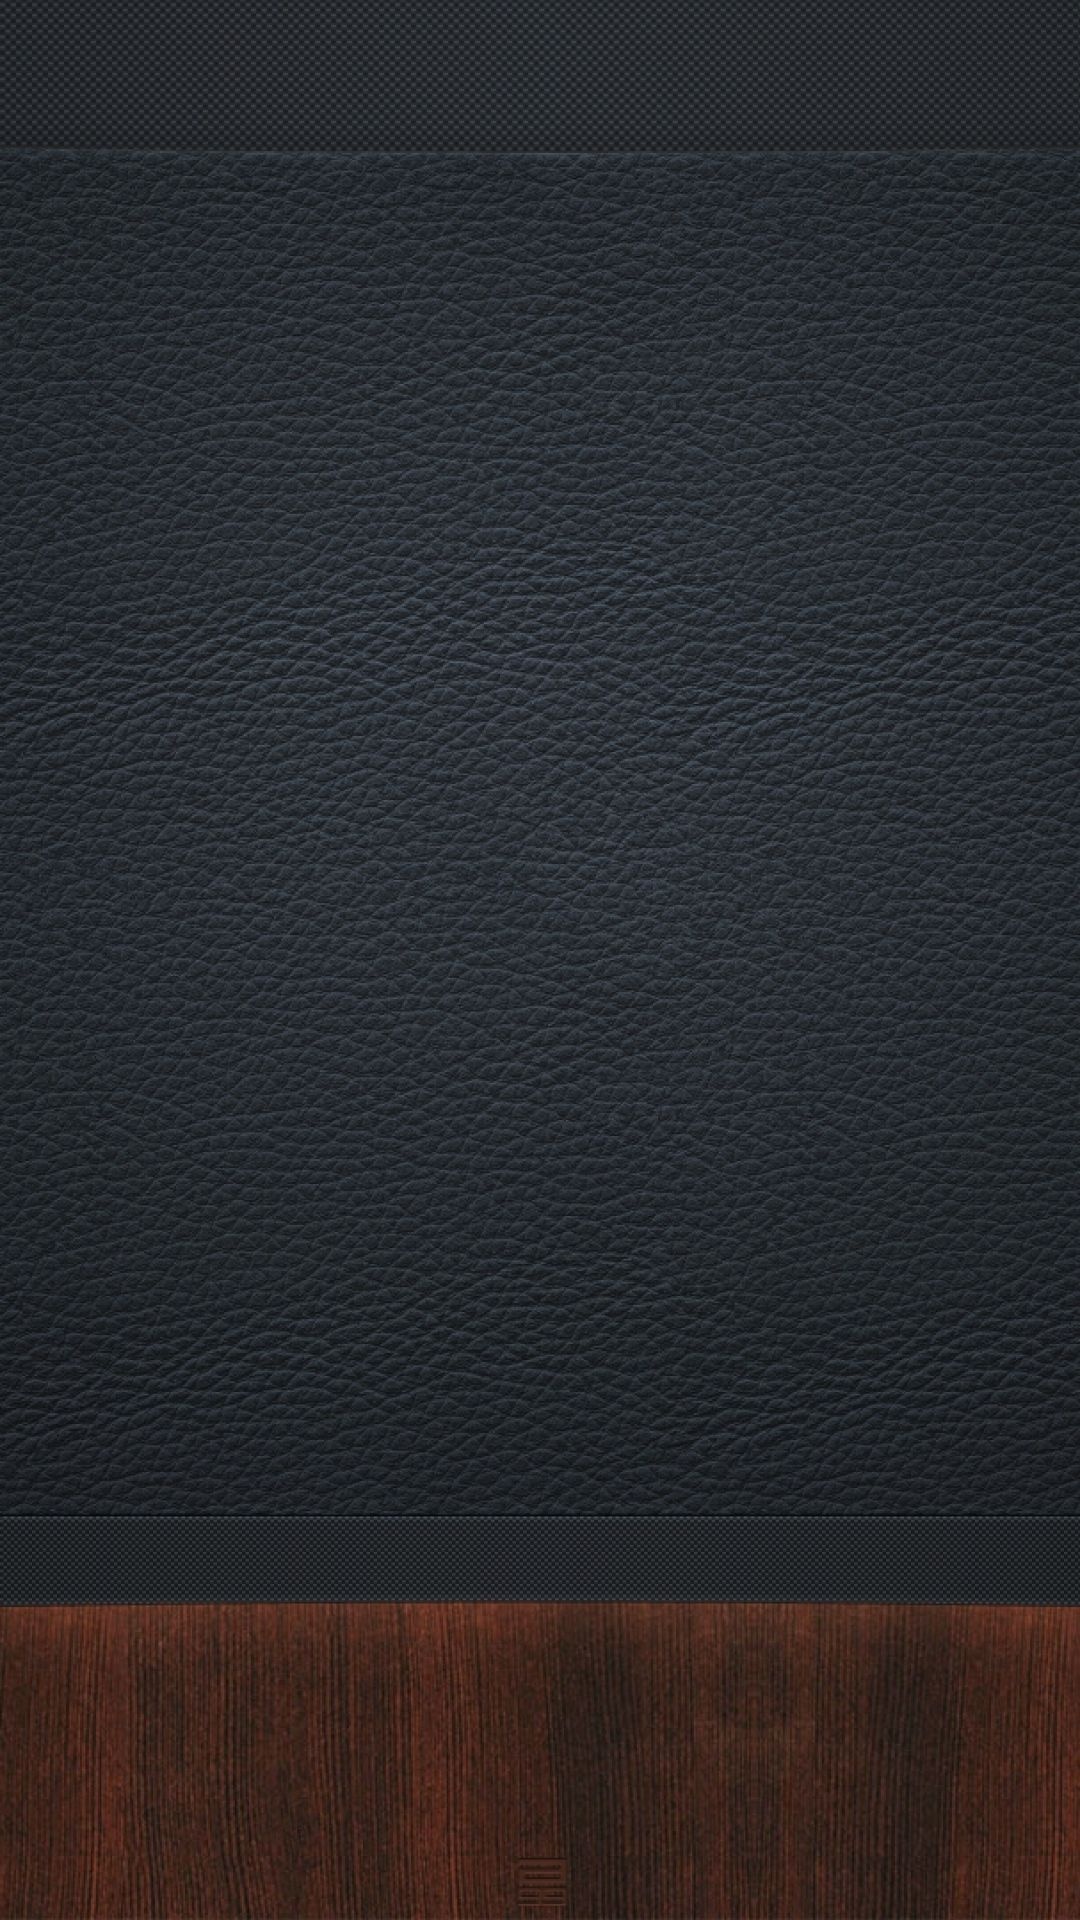 New wallpaper iphone wallpaper, Apple wallpaper, Modern design, Trendy style, 1080x1920 Full HD Phone